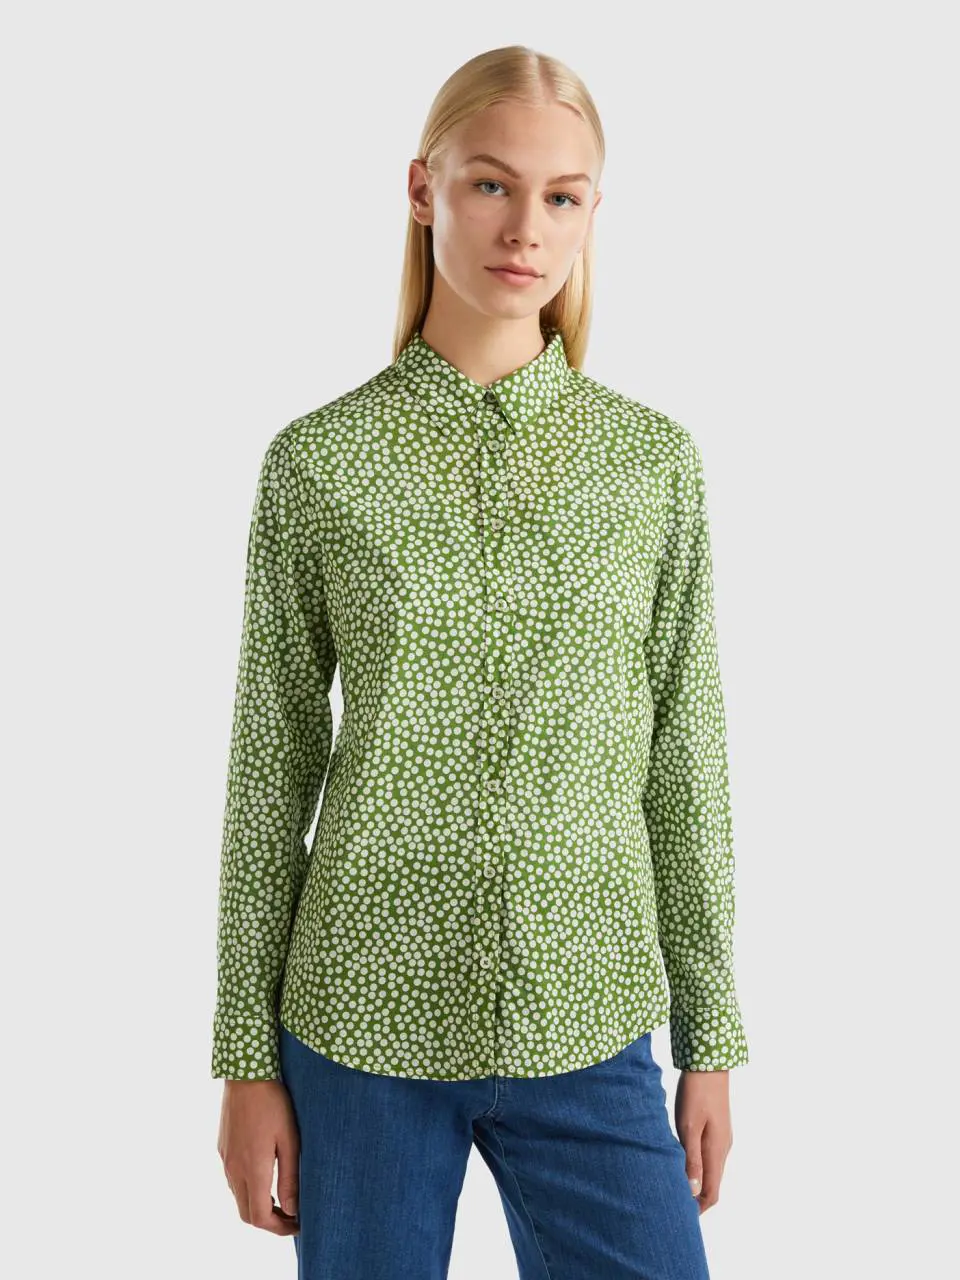 Benetton green shirt with white polka dots. 1